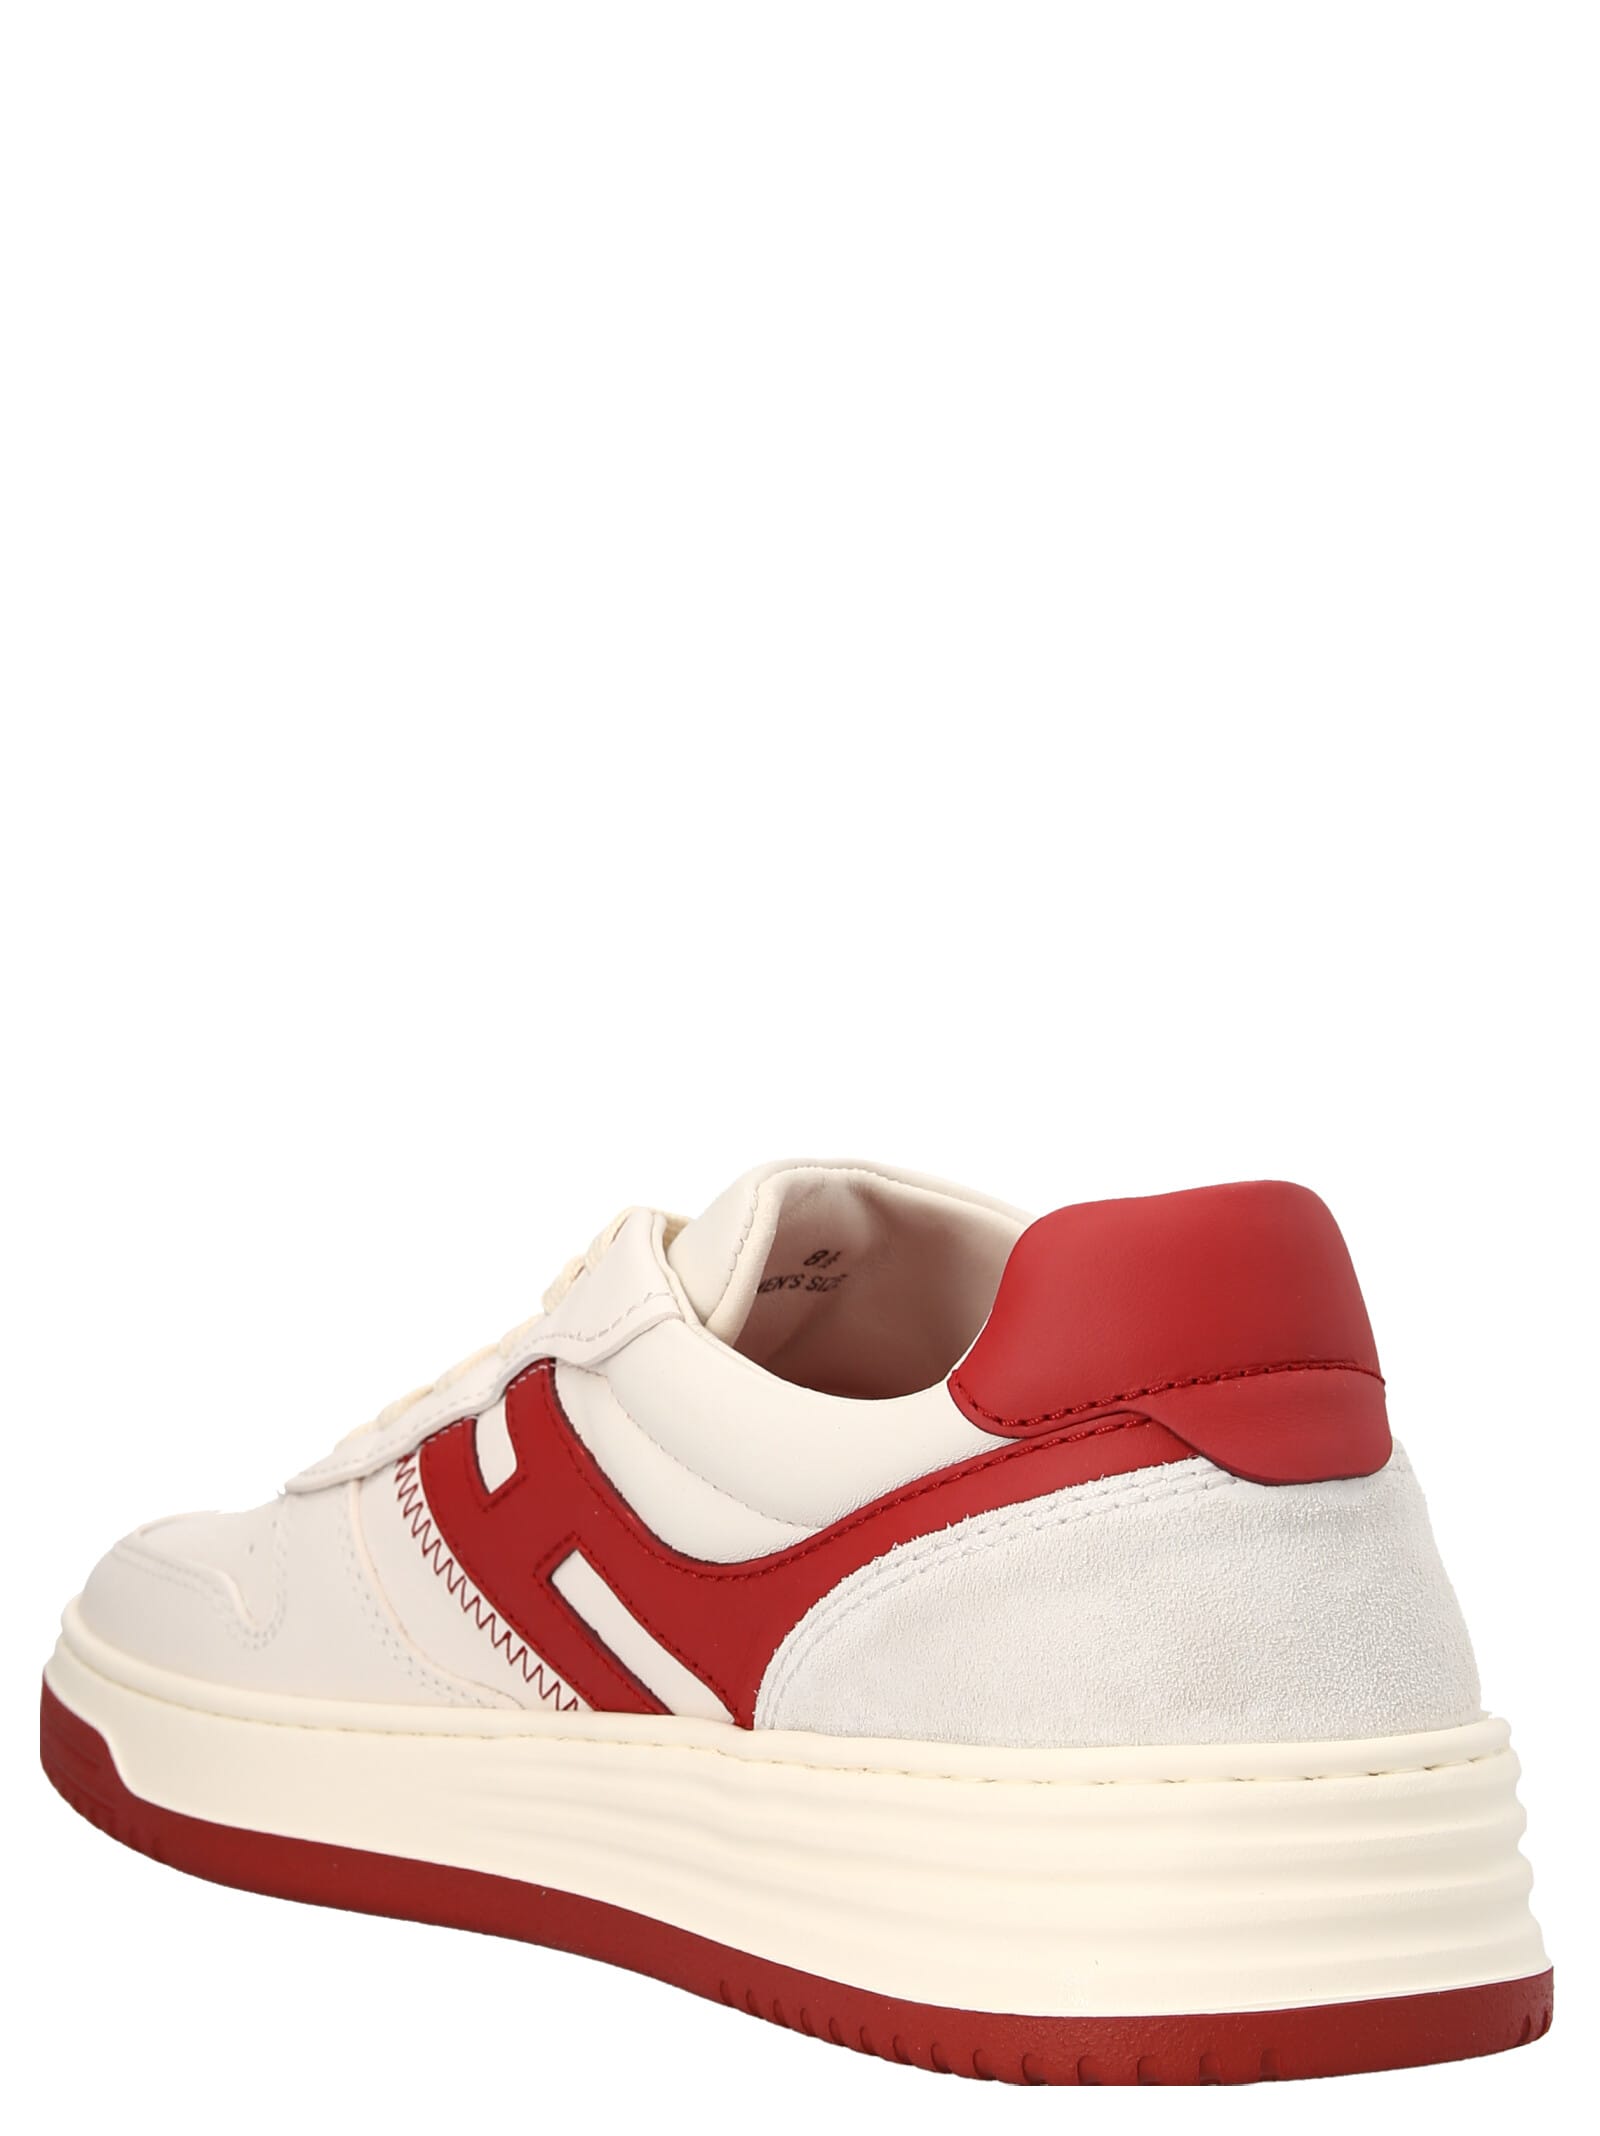 Hogan Sneakers H630 Greyredwhite In Grey,red,white | ModeSens